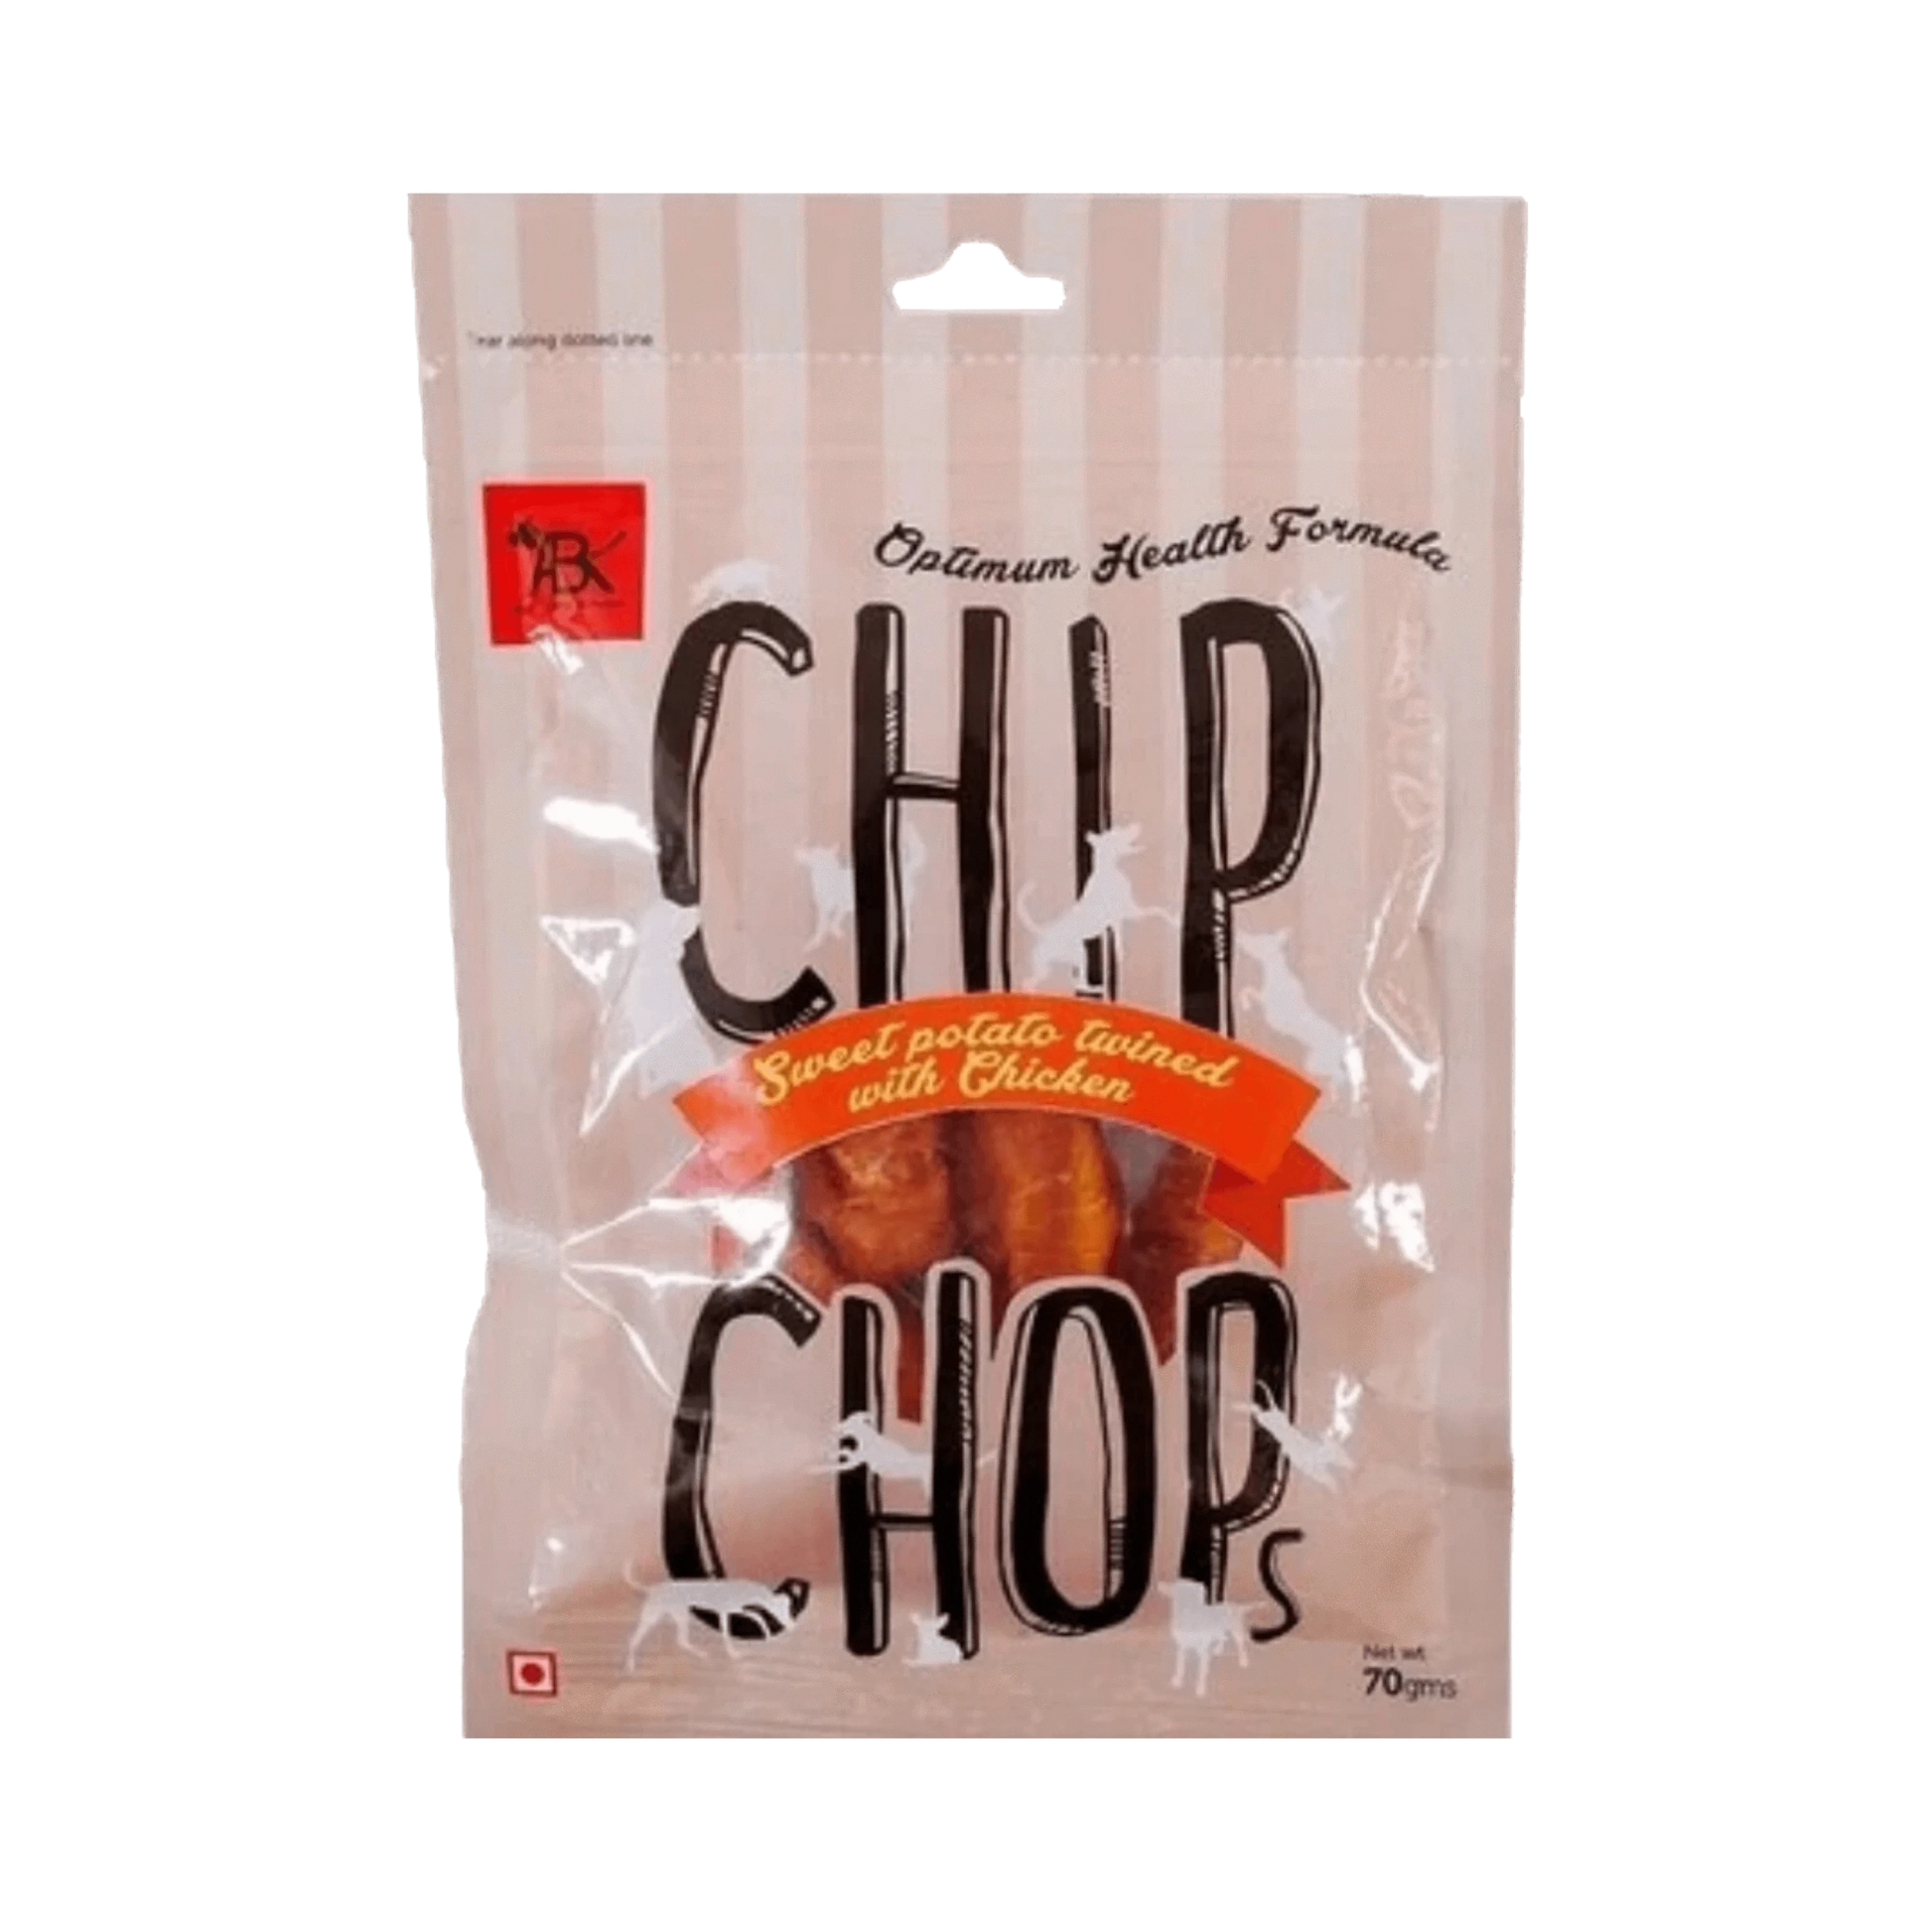 CHIP CHOP SWEET POTATO WT CHIC - Animeal